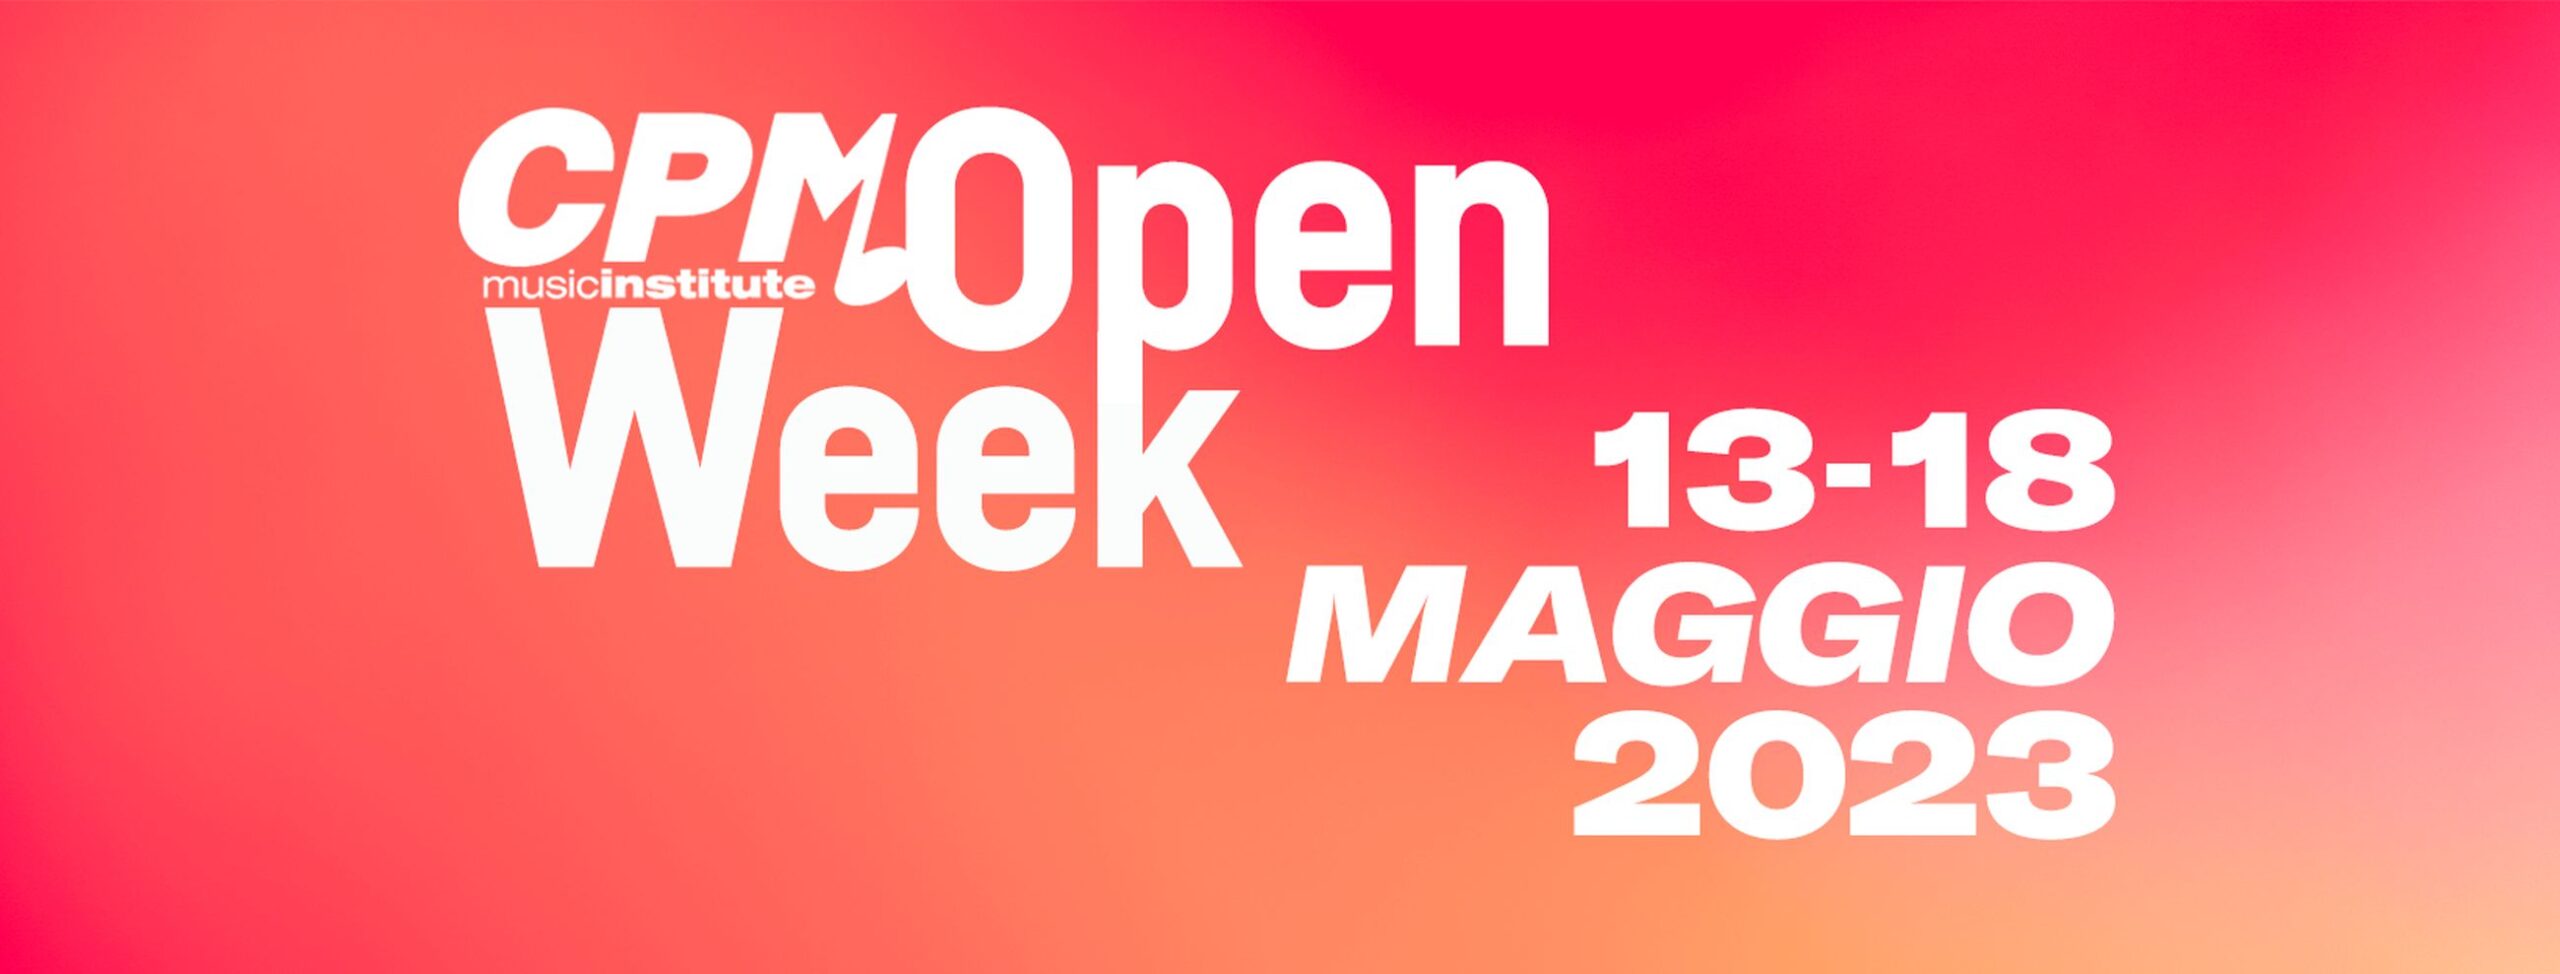 Da sabato 13 a giovedì 18 maggio torna l’Open Week al CPM Music Institute di Milano